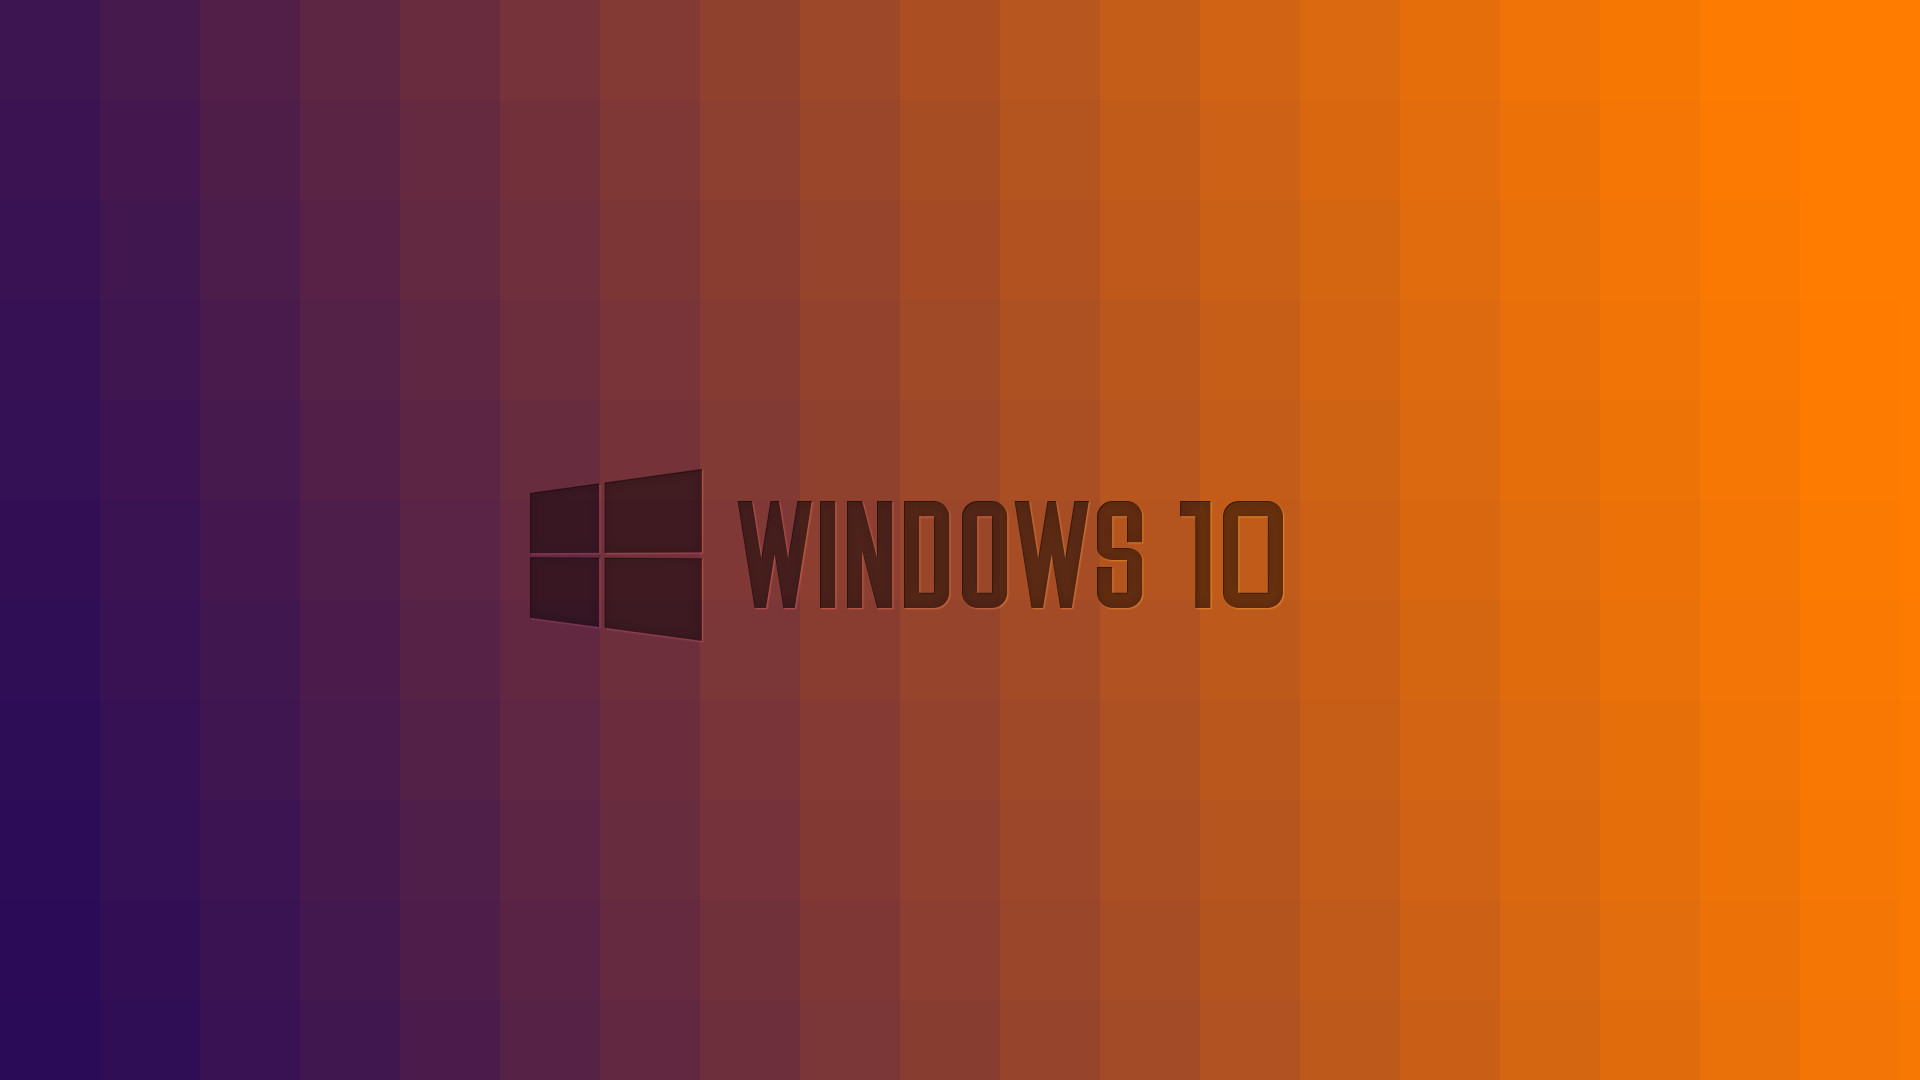 1920x1080 Windows 10 Wallpaper 1080p Full HD Purple To Orange Fade